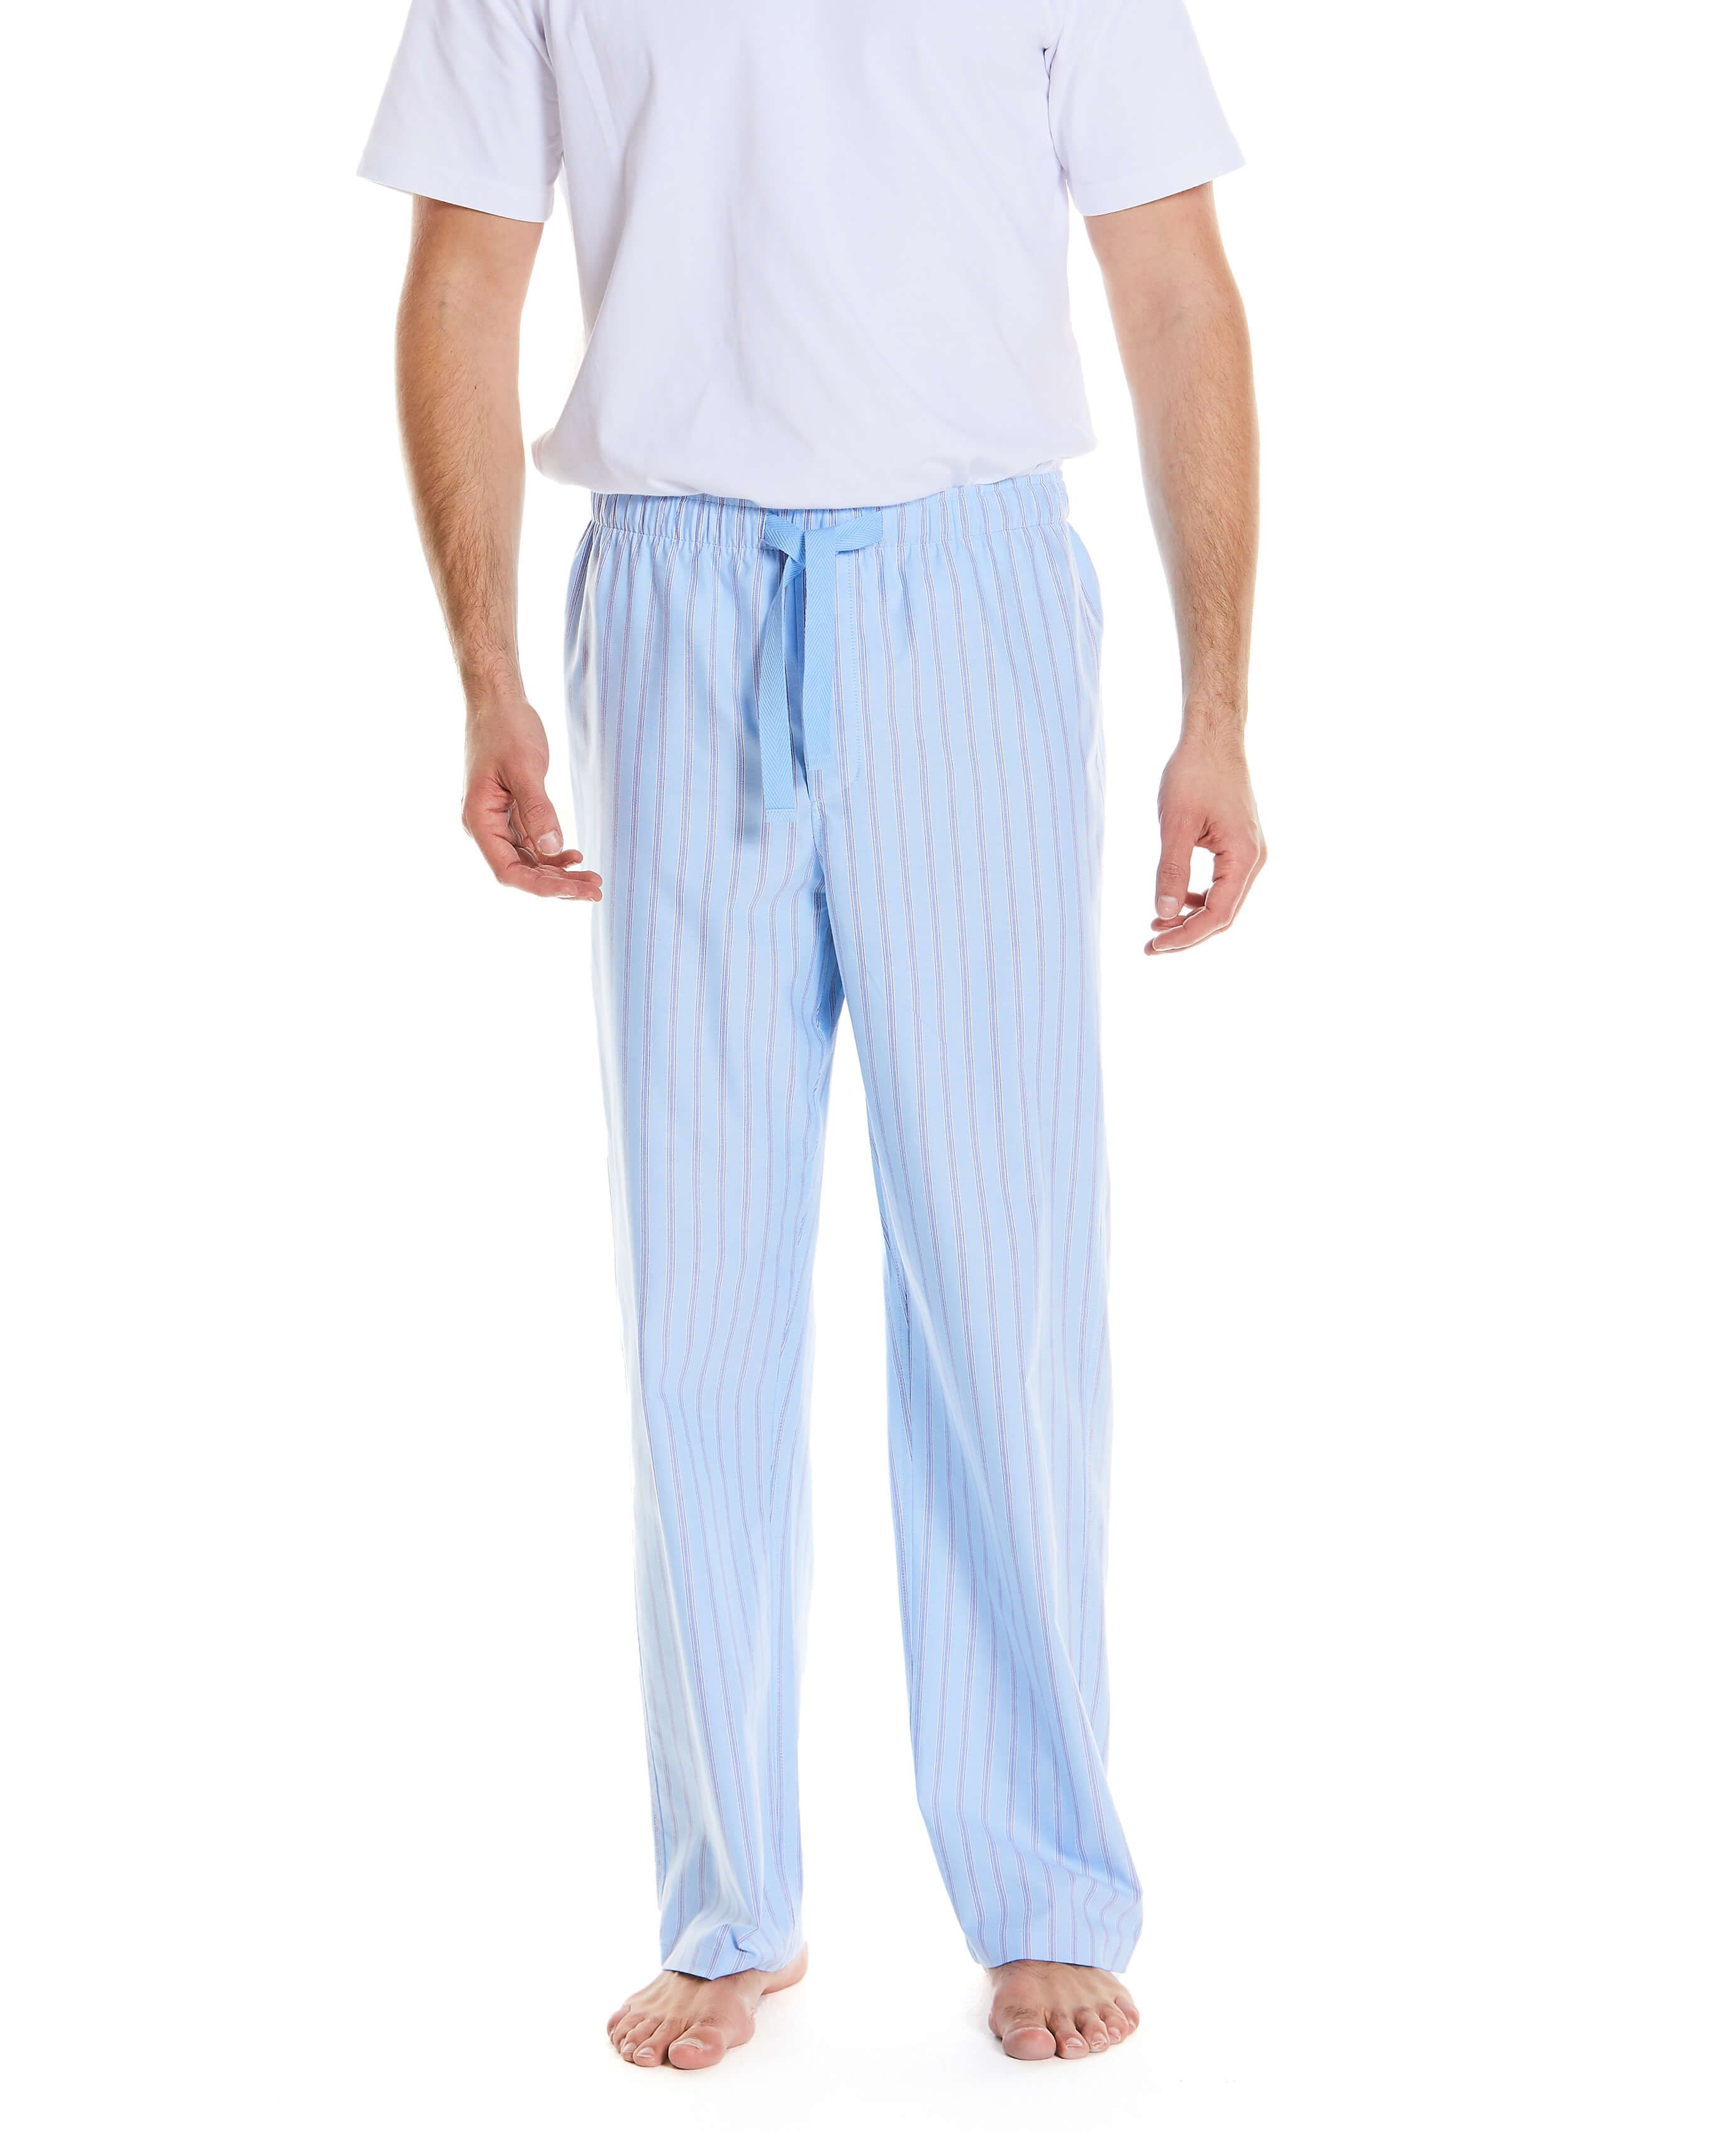 Men's blue and white striped Oxford cotton lounge pants